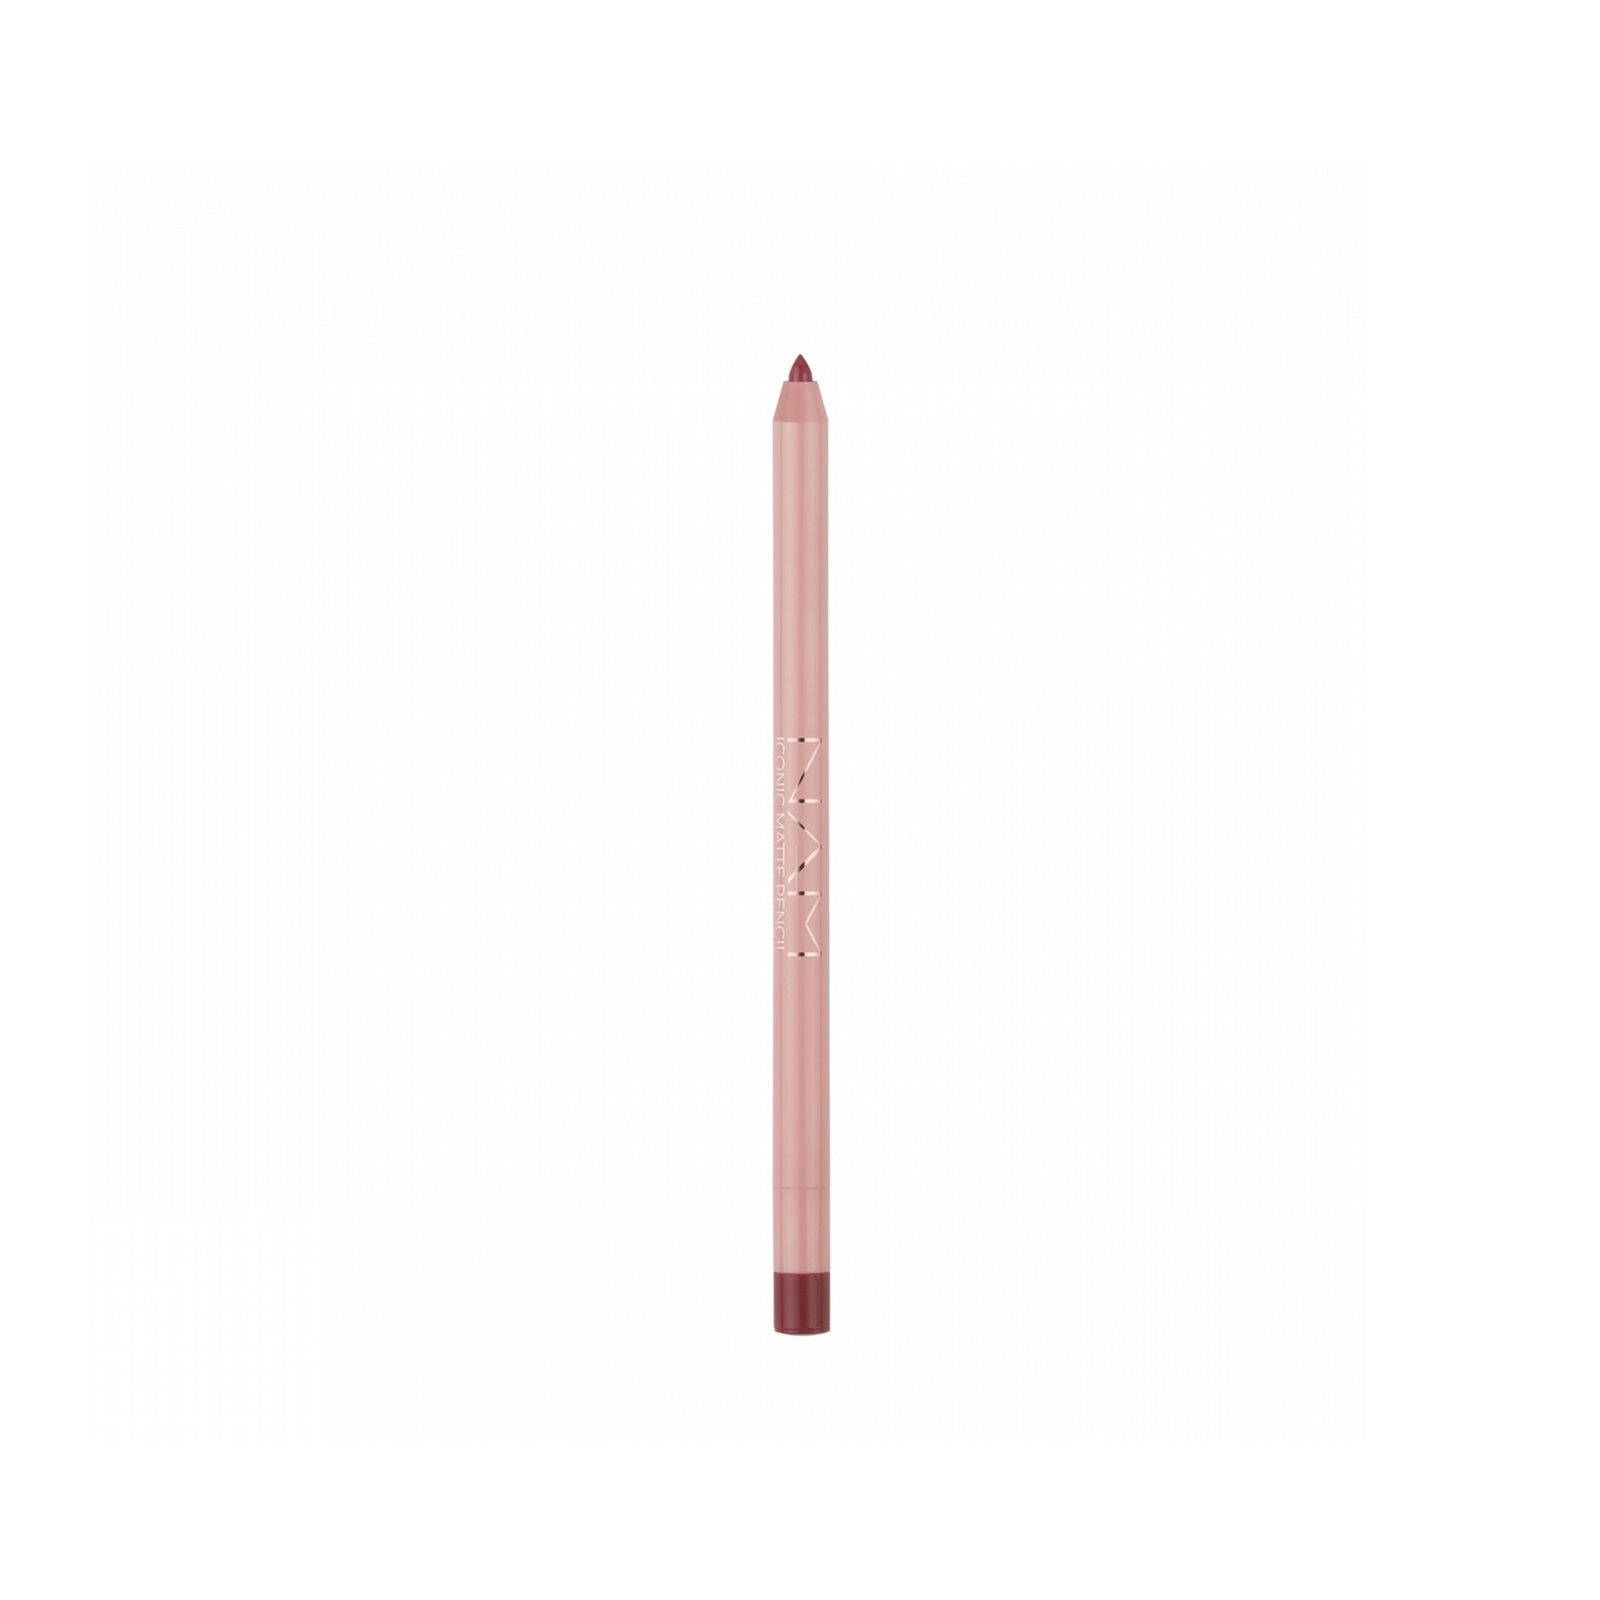 NAM Iconic Matte Pencil 4 Soft Nude 0.7g